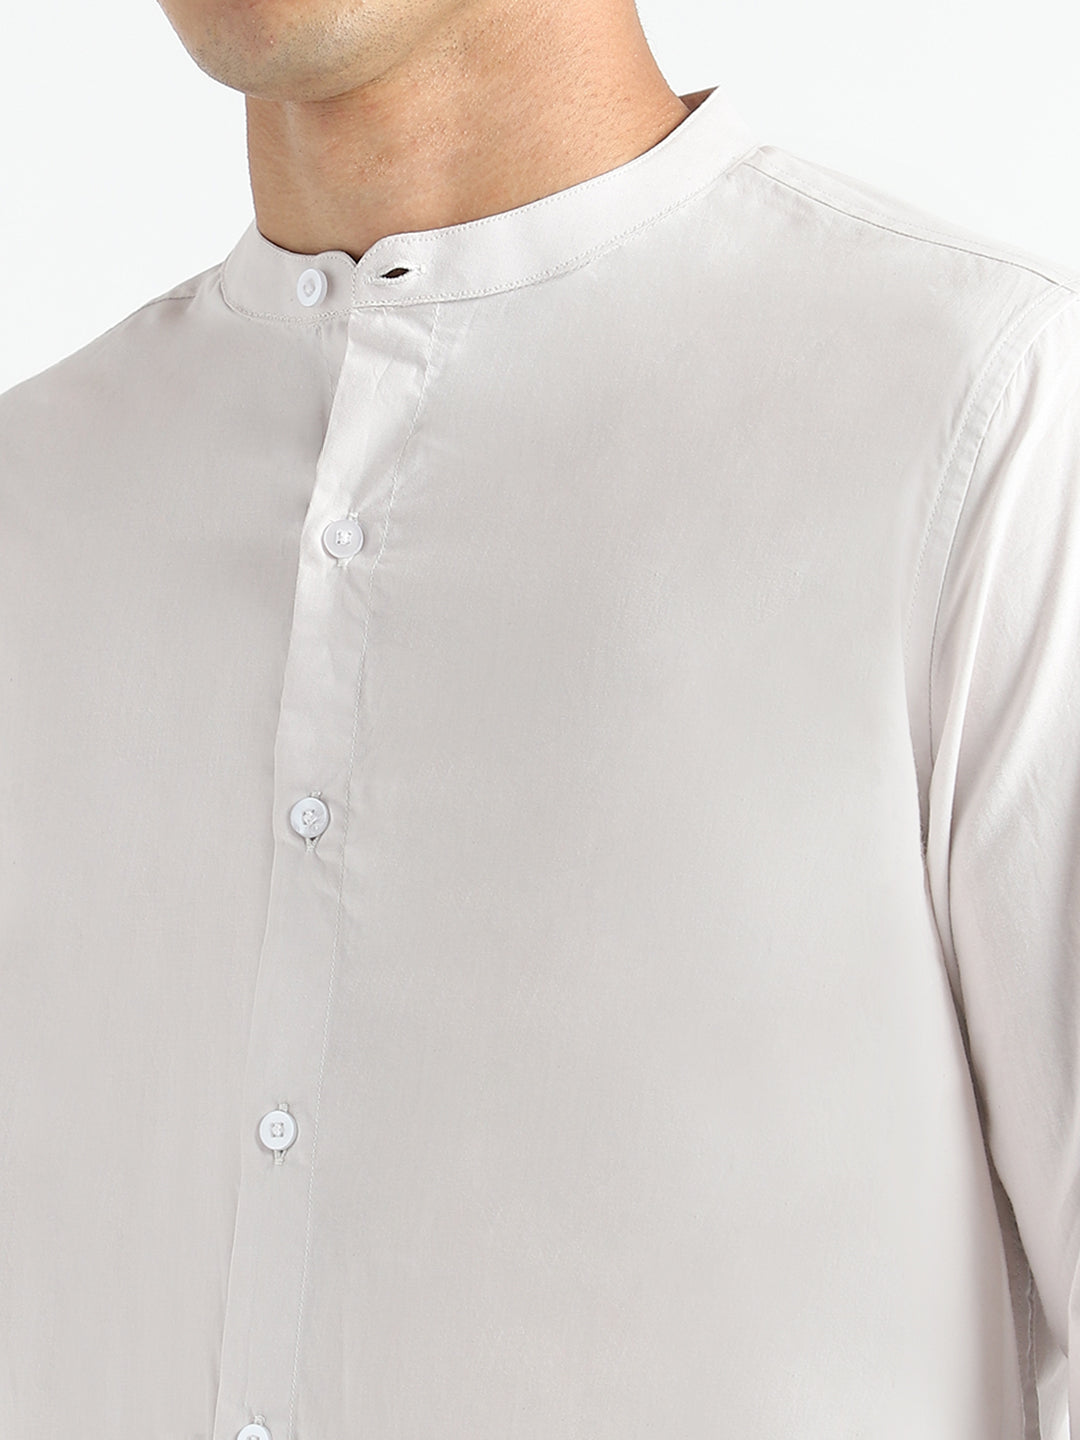 Ash Grey Mens Organic Cotton & Naturally Dyed Round Neck Shirt